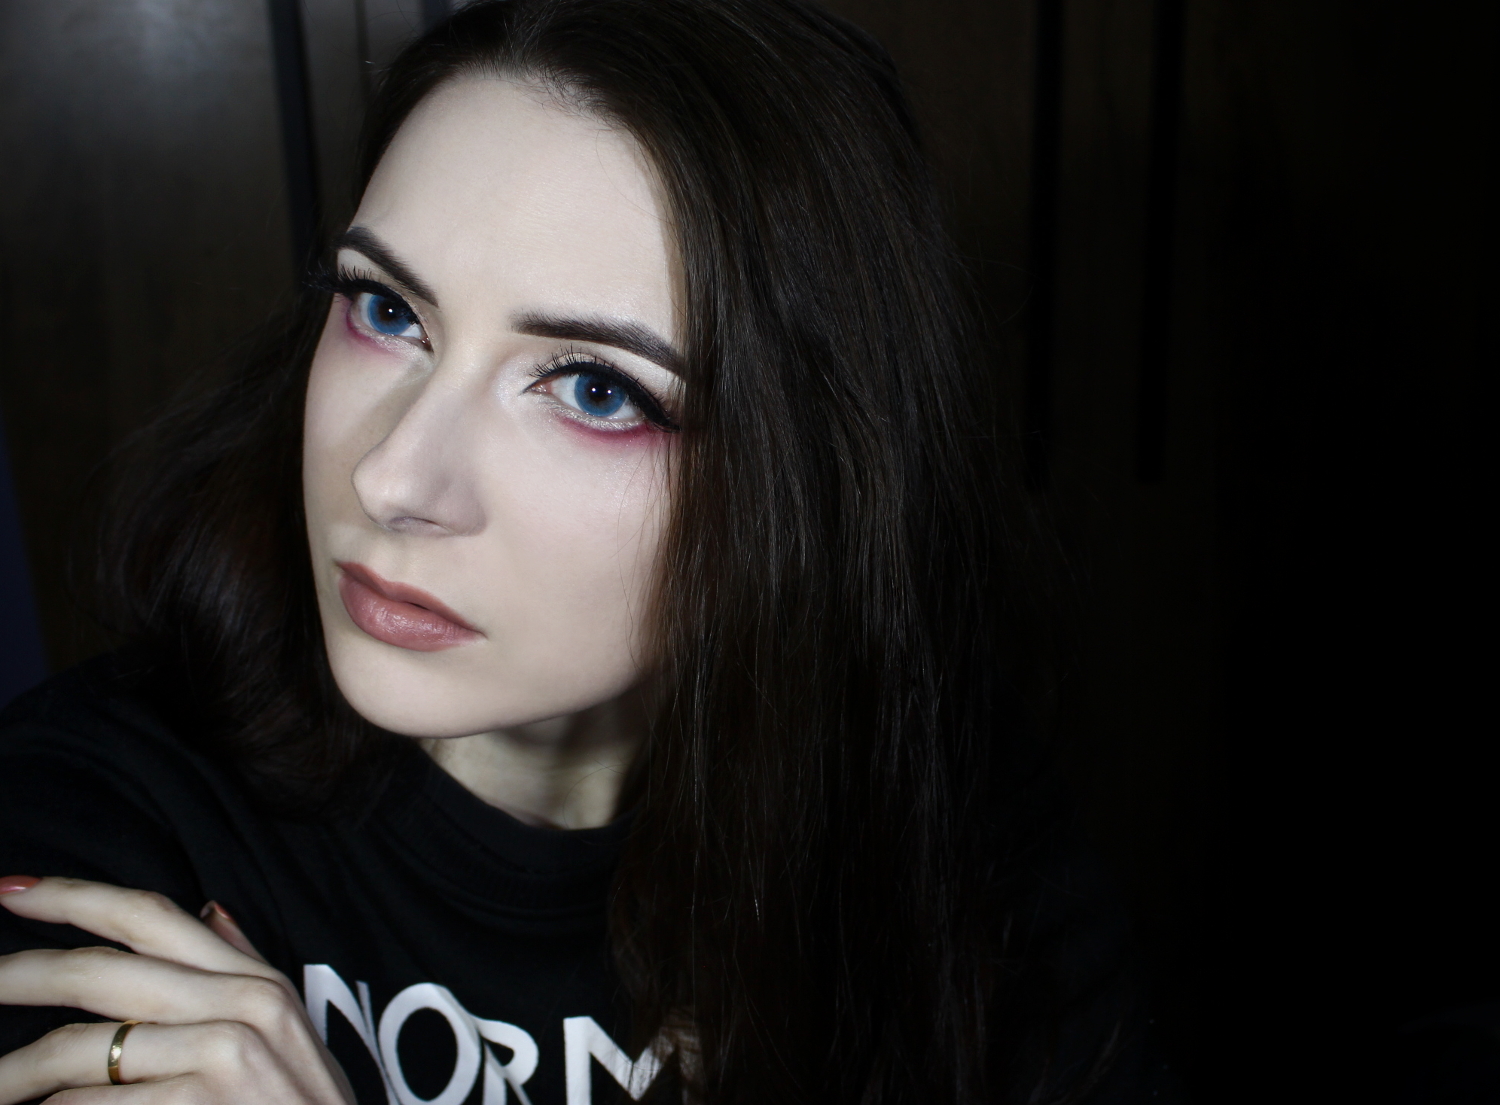 blogger Liz Breygel shows a doll-eye makeup look with bright blue eye-enlarging contact lenses